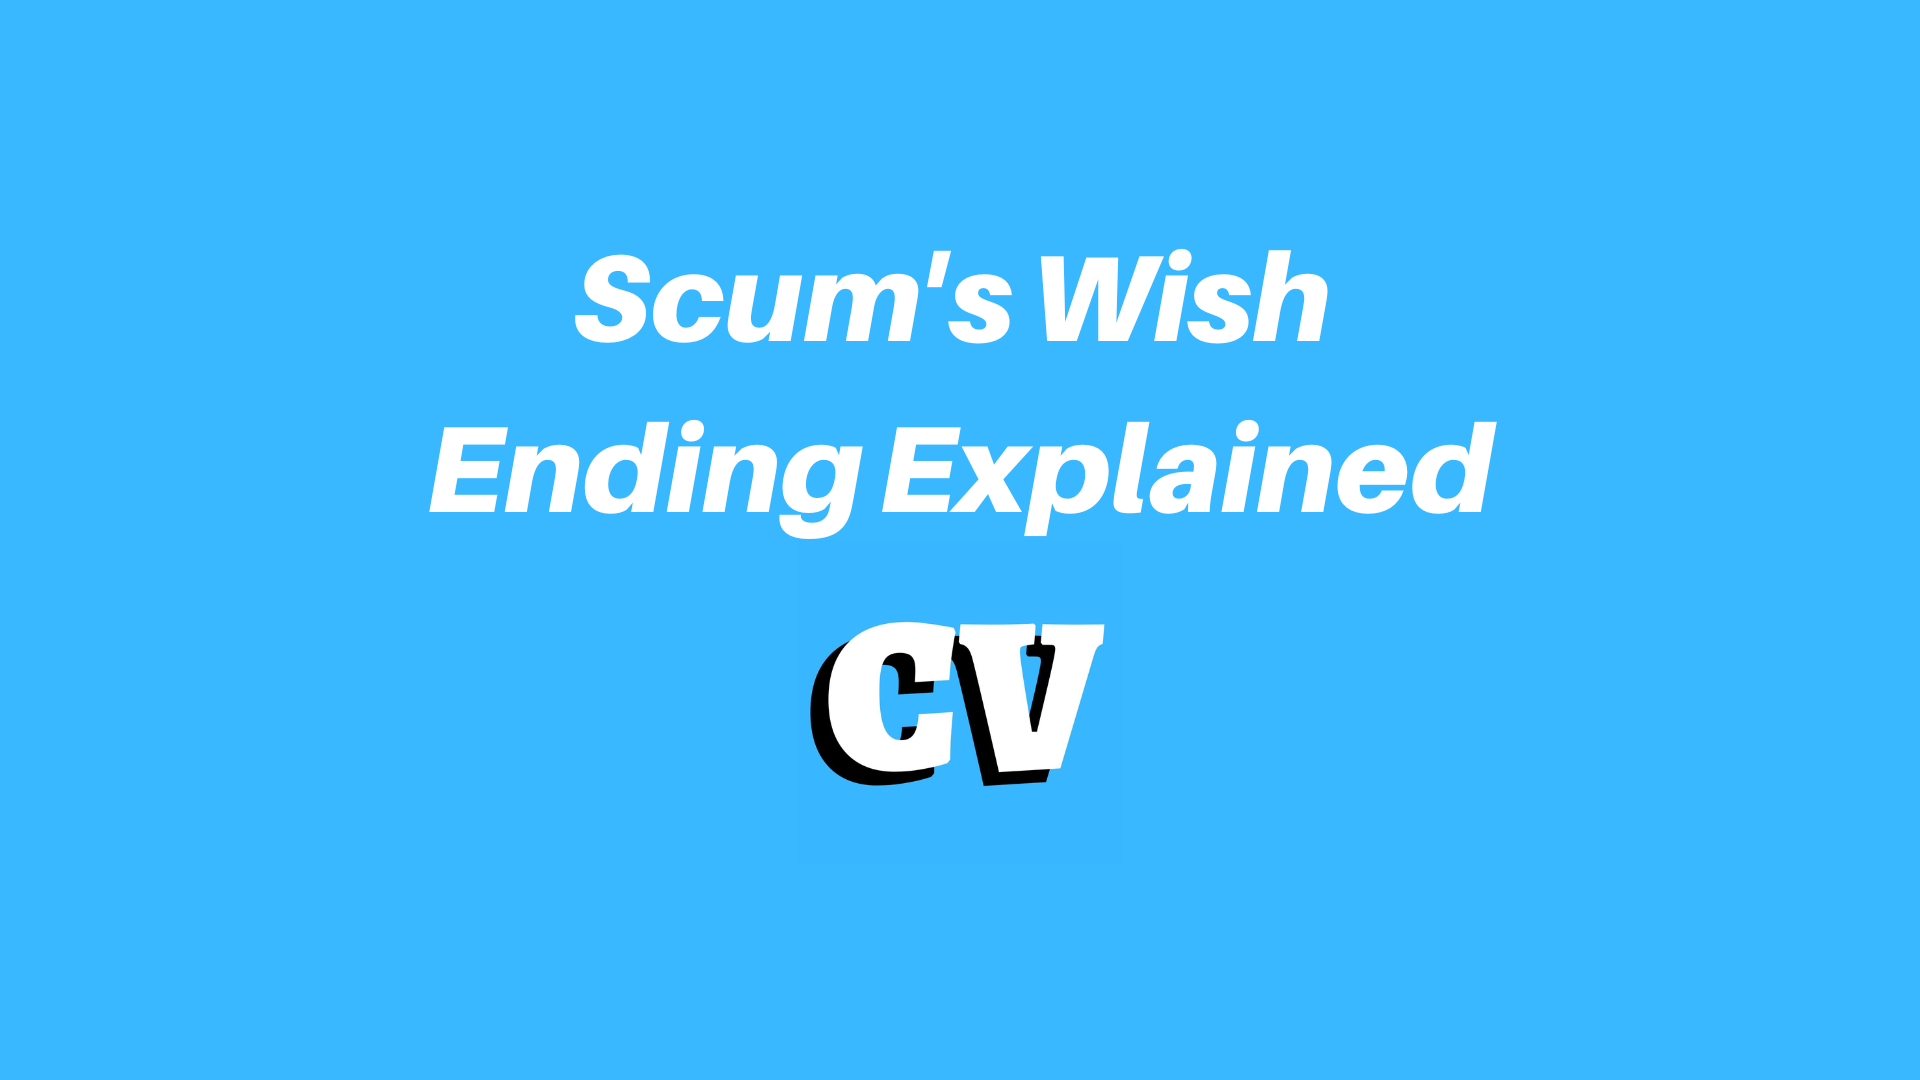 Scum’s Wish Ending Explained